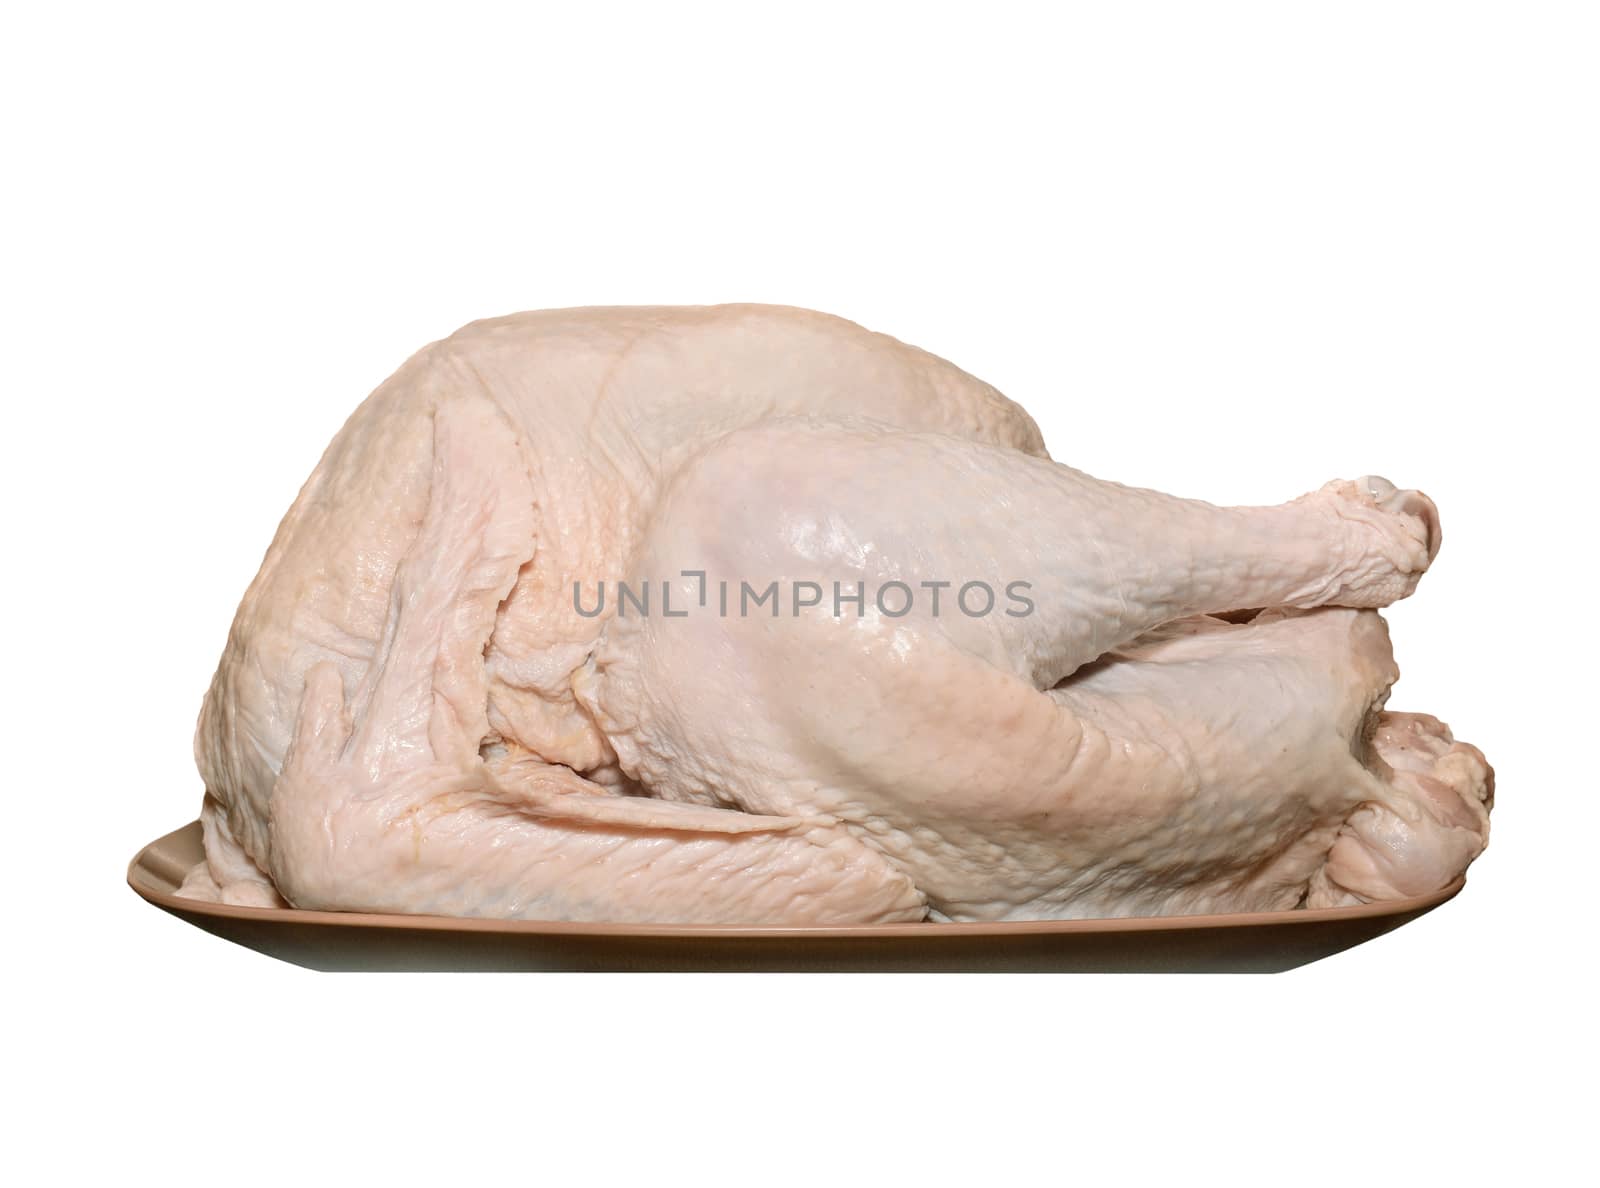 Uncooked Turkey on Platter by sCukrov